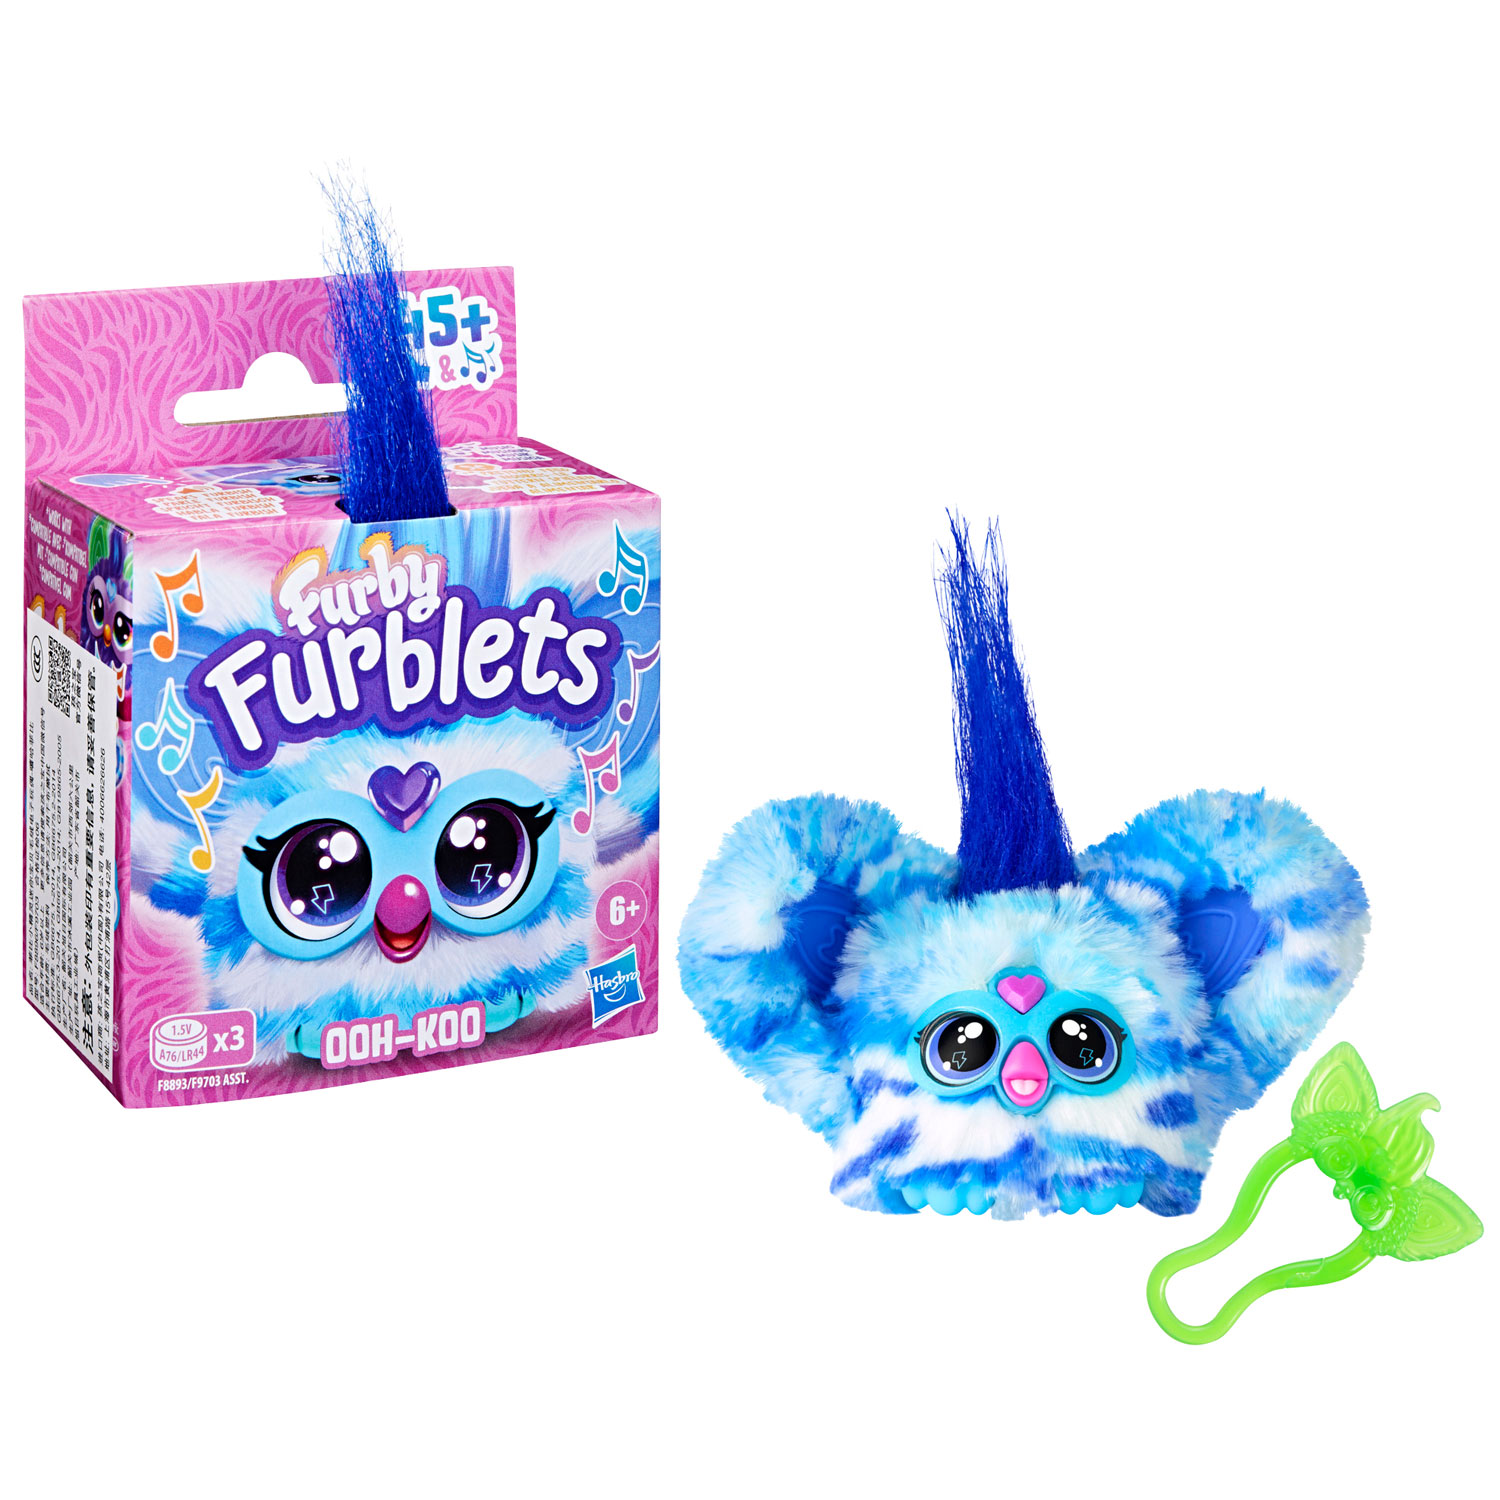 Hasbro Furby Furblets Ooh-Koo Electronic Plush Toy